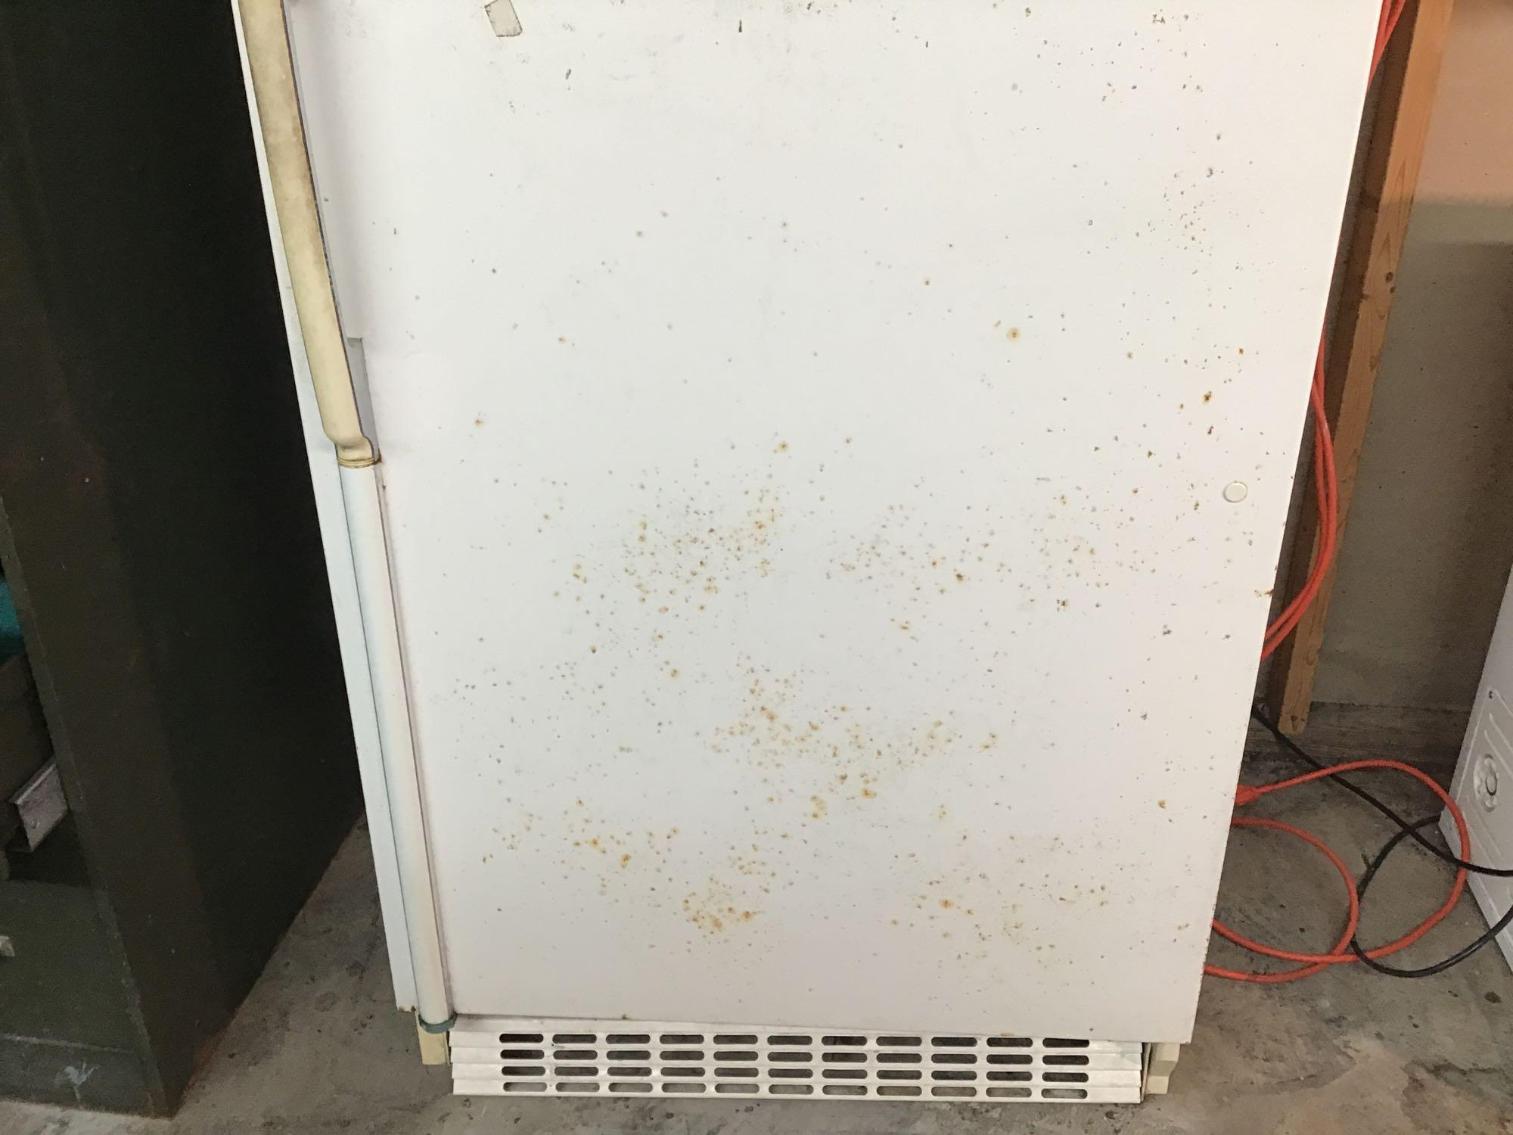 Image for Maytag refrigerator